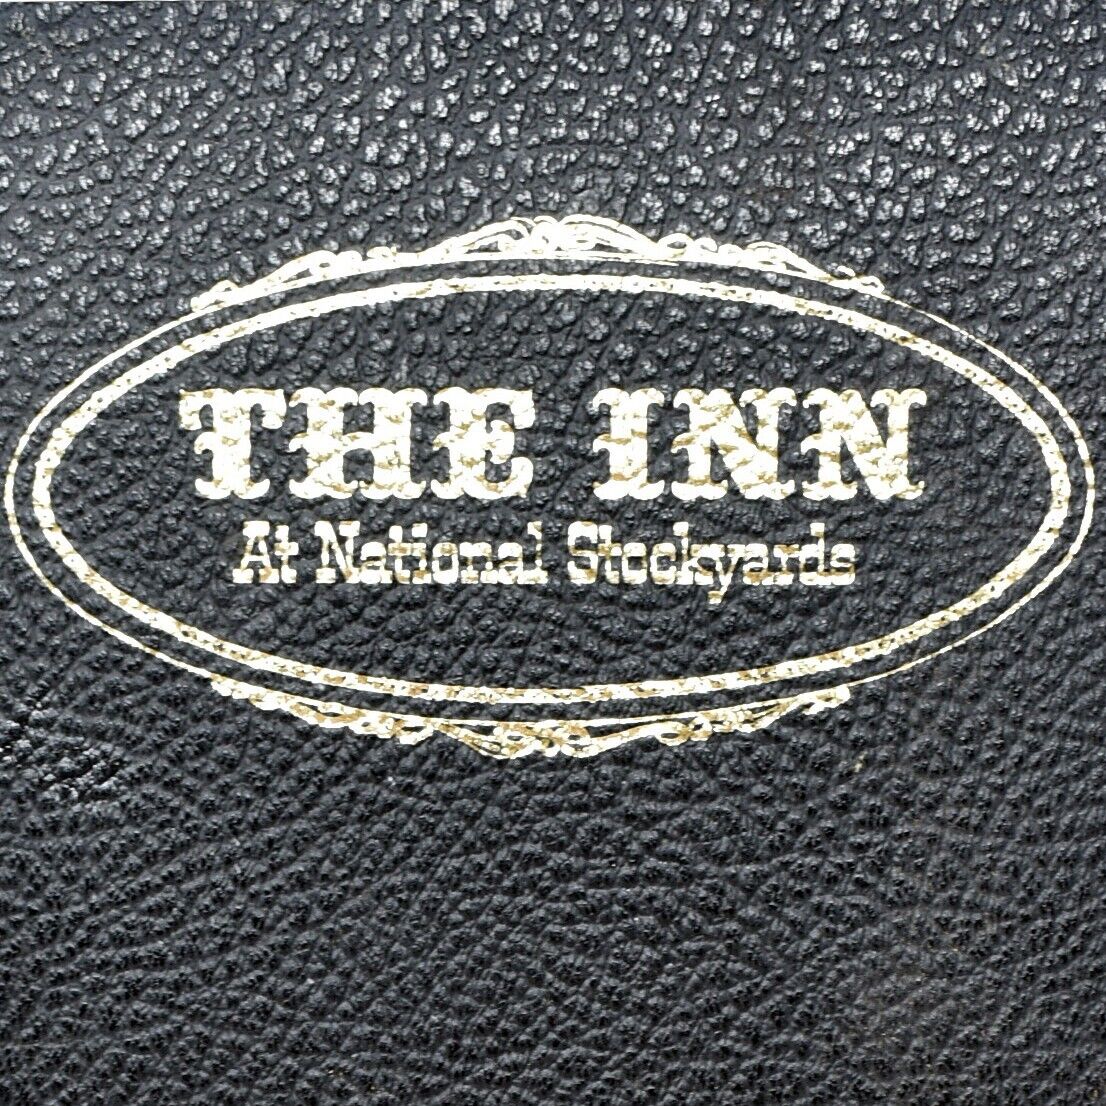 Vintage 1970s The Inn Restaurant Menu National Stockyards St Louis Illinois